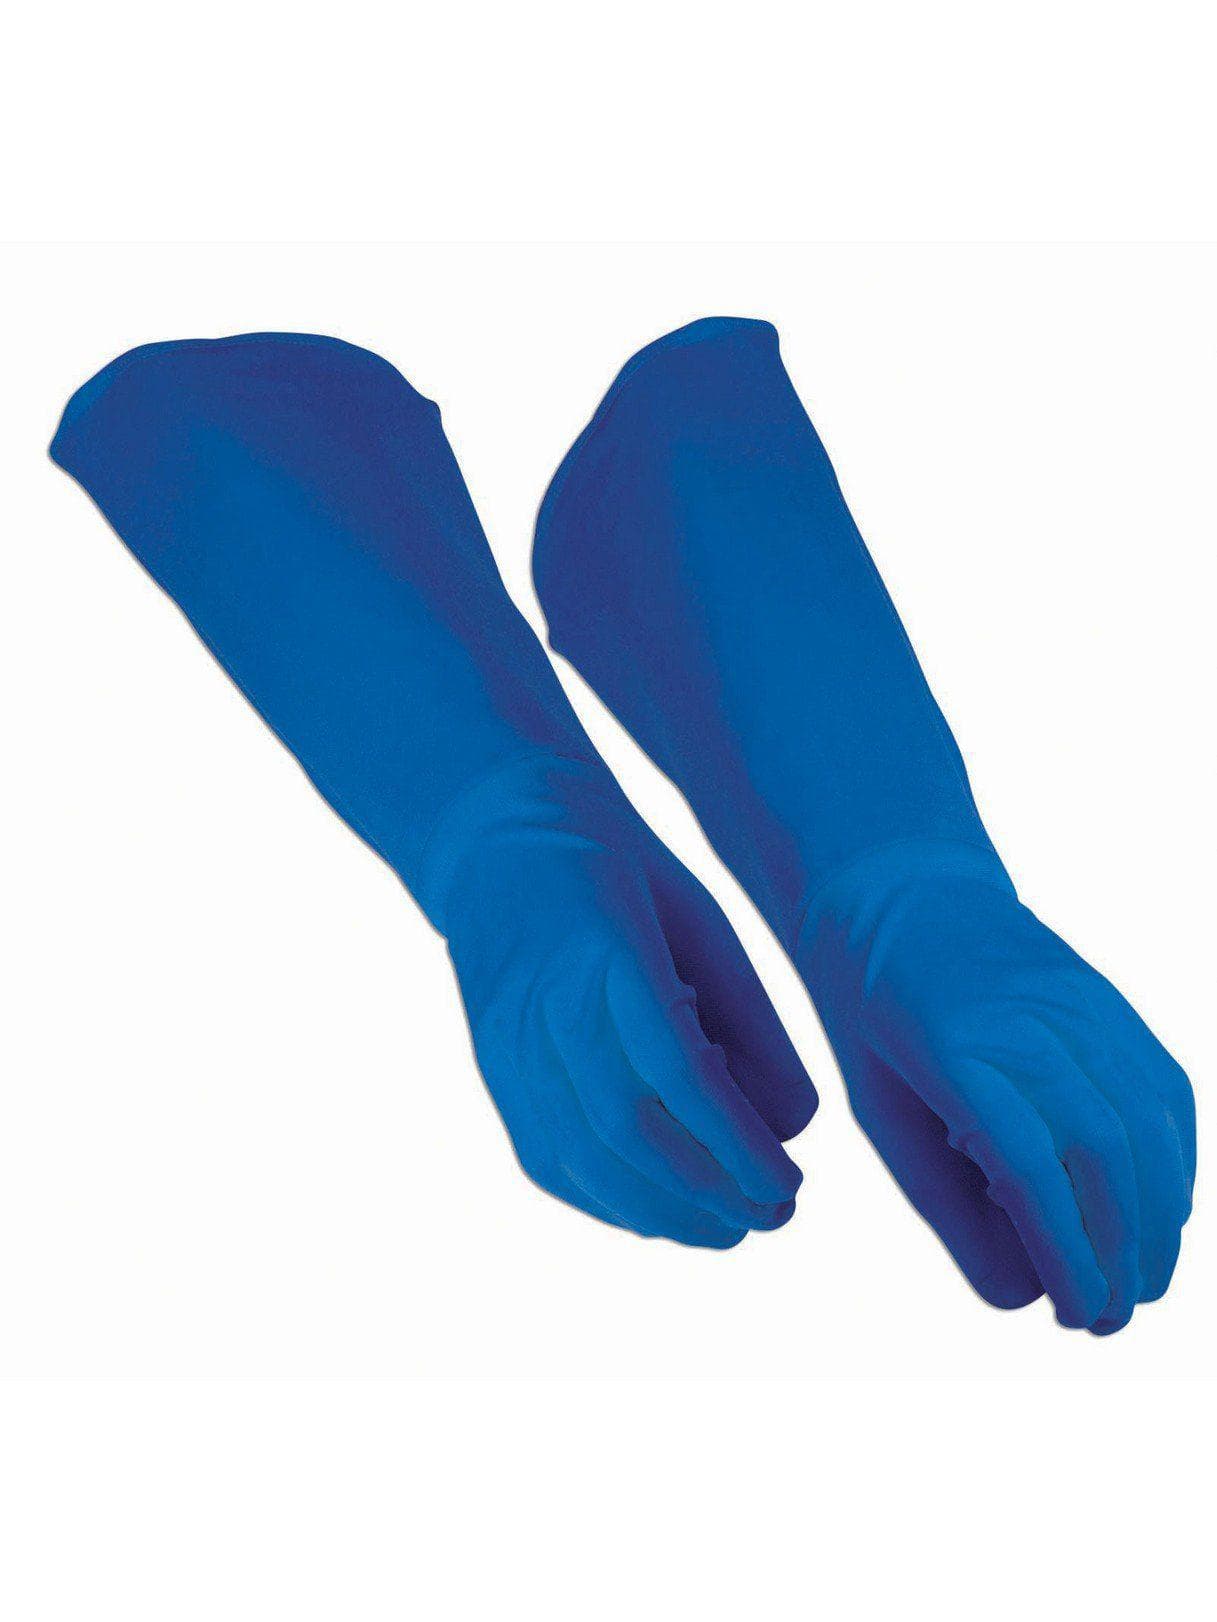 Adult Blue Superhero Gloves - costumes.com